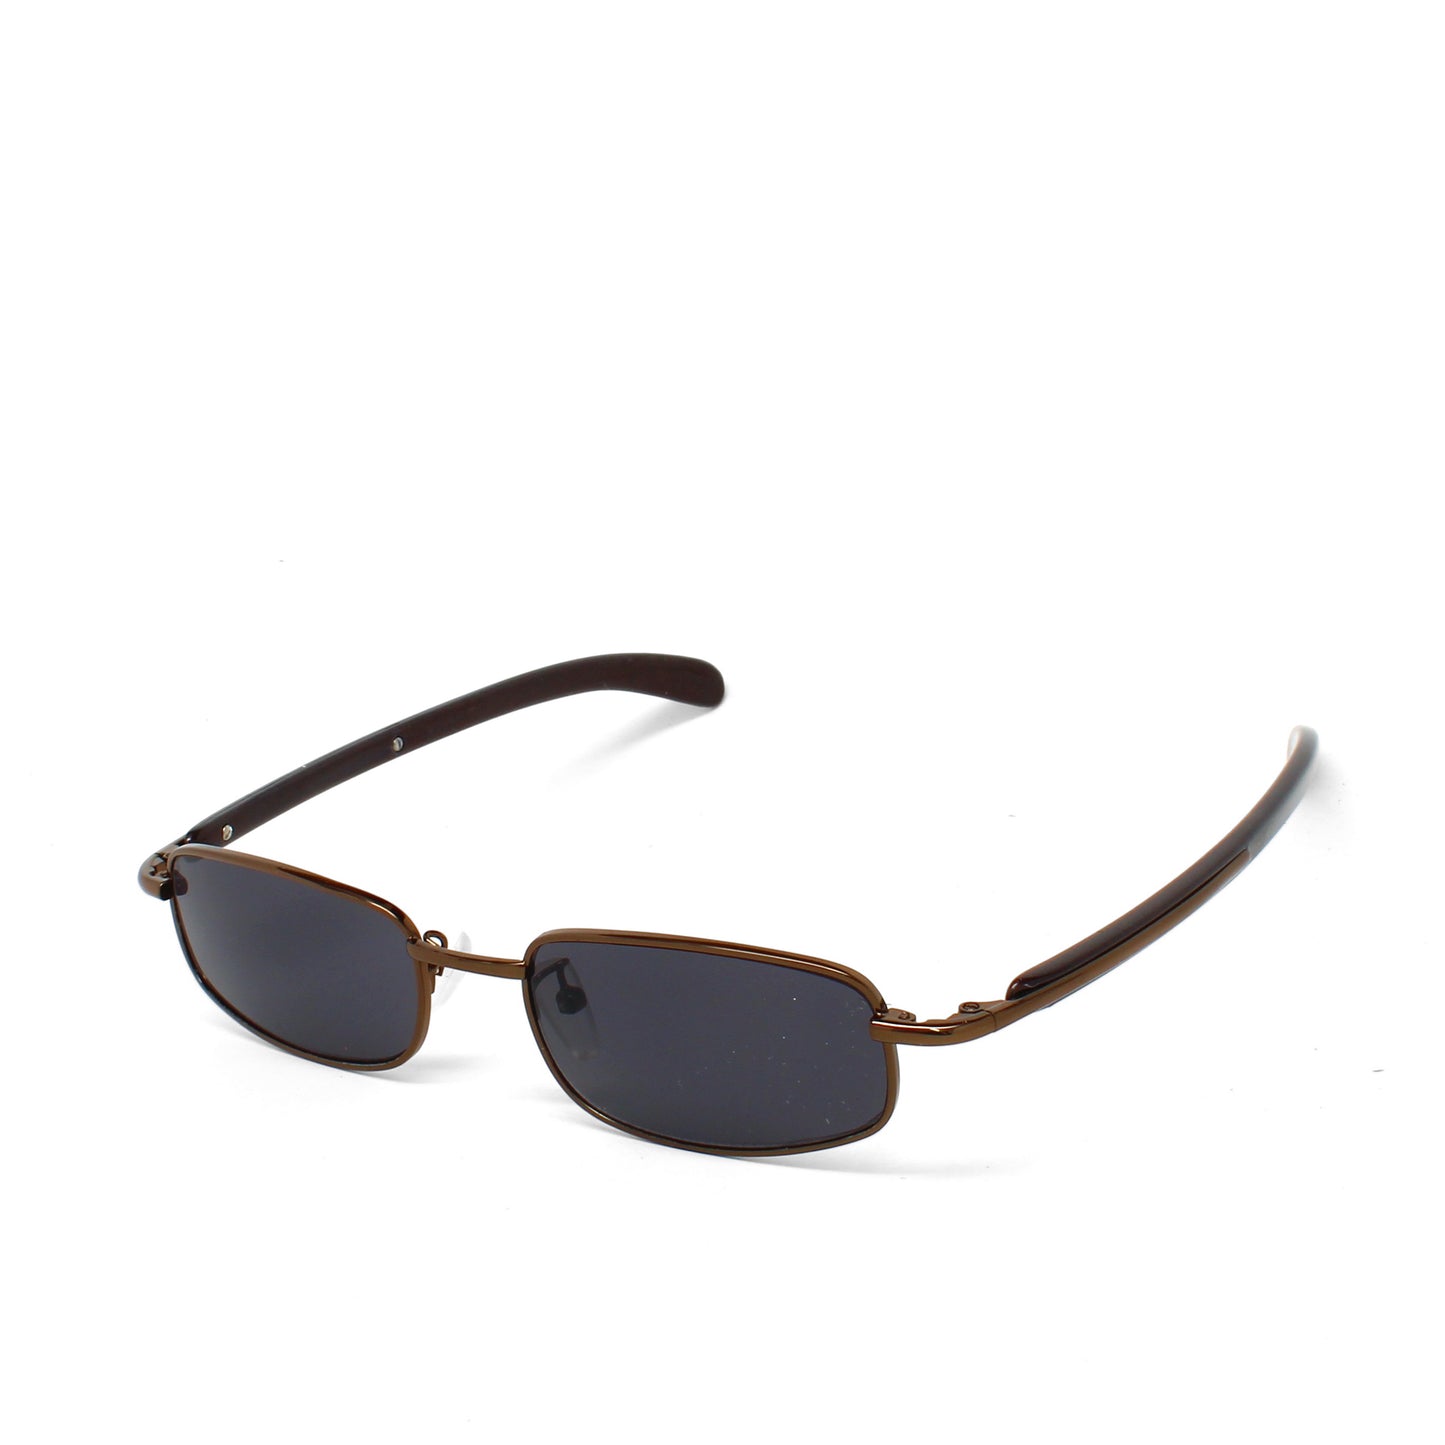 //Style M27// Vintage Small Size 1996 Wraparound Rectangle Roxbury Sunglasses - Bronze